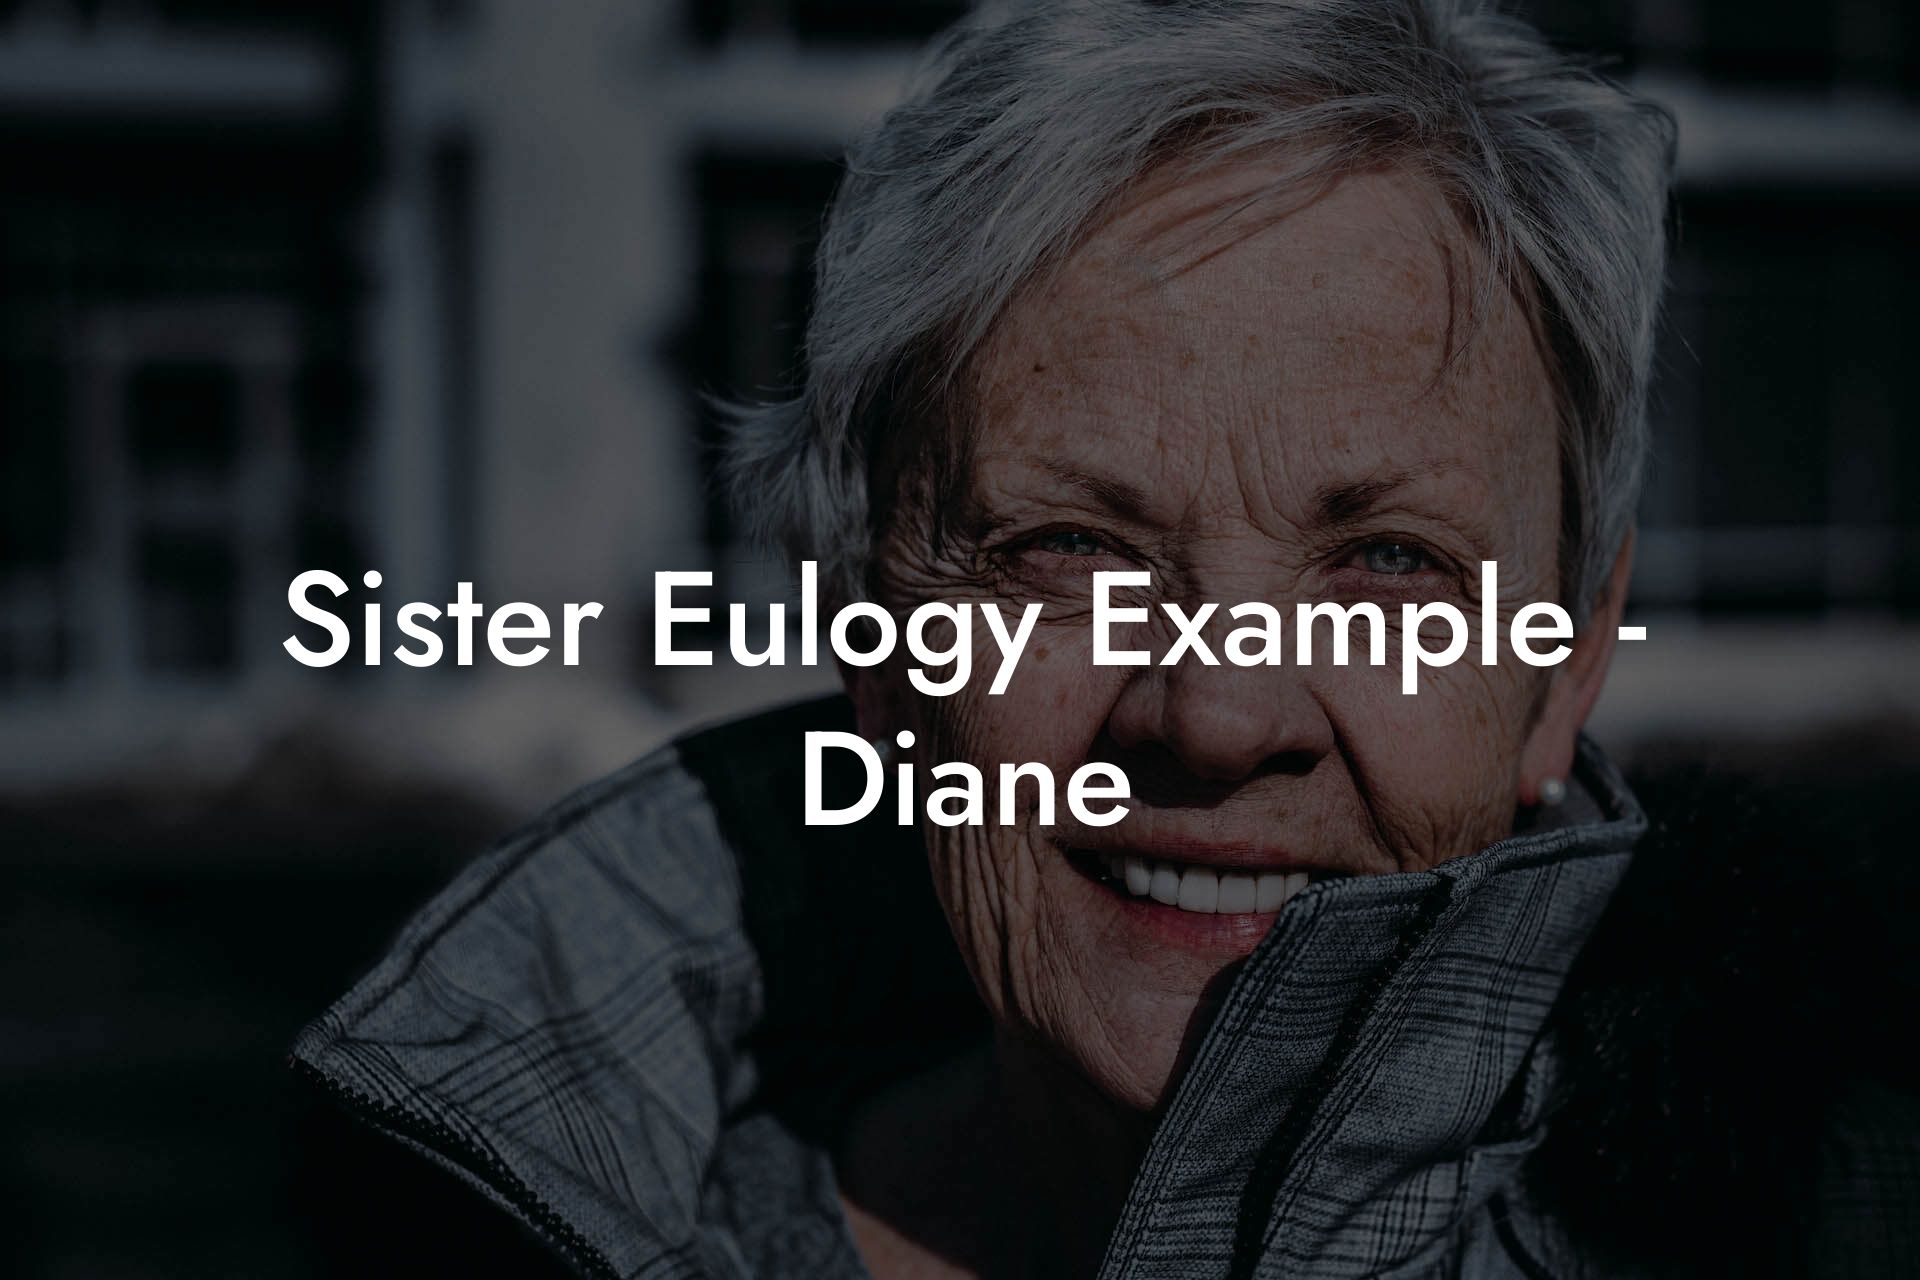 Sister Eulogy Example - Diane